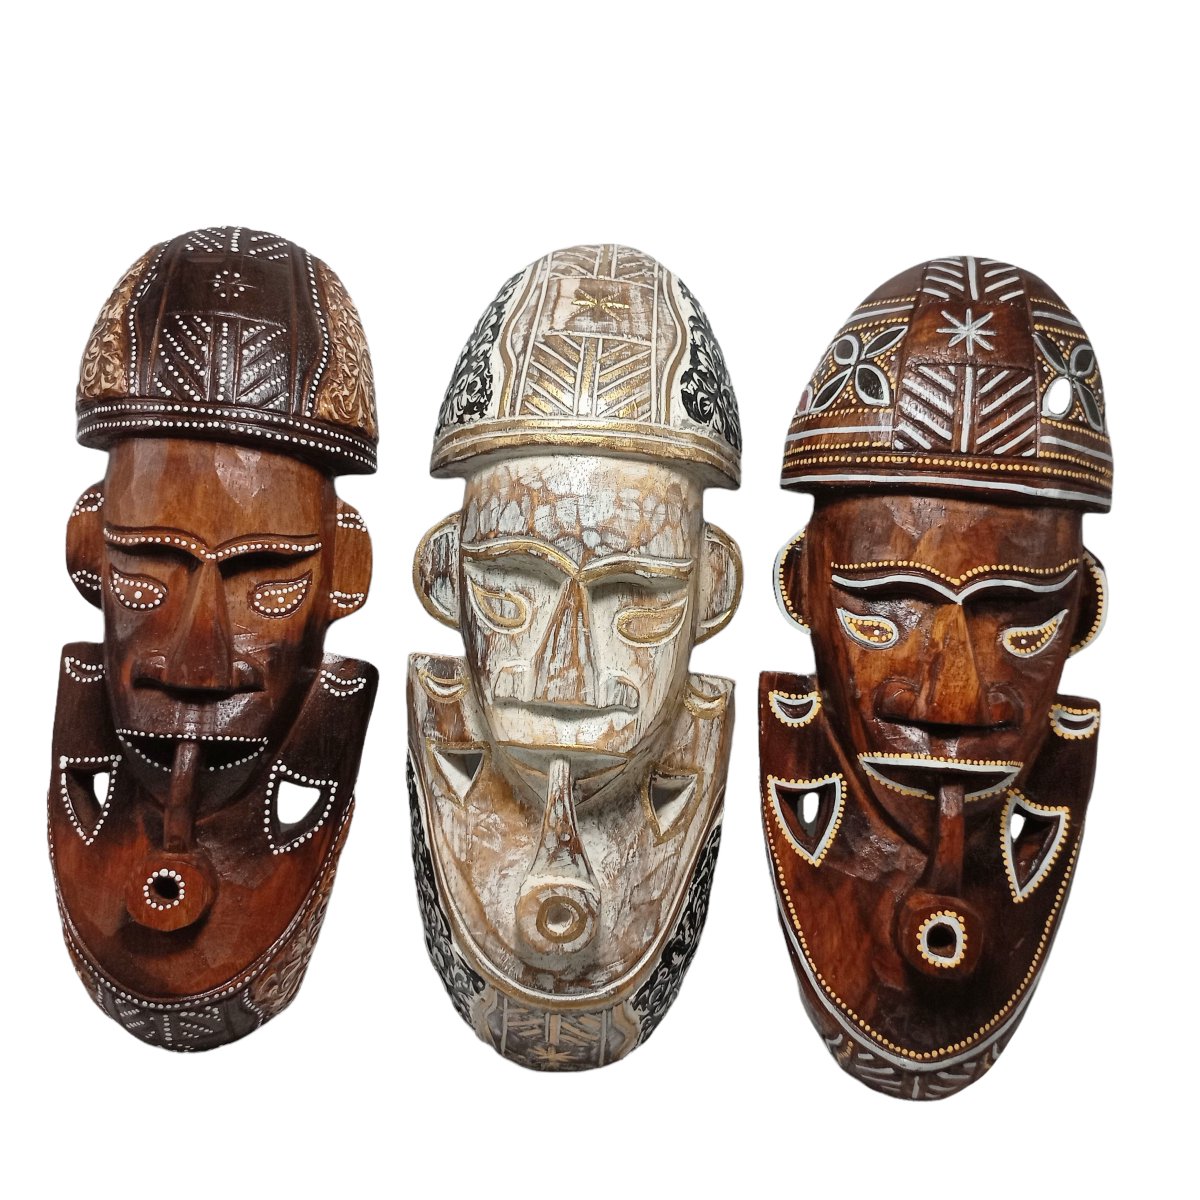 Check out Pipe Men Face Smoking Wood Masks Decor Africa Hand Carved Wall Art Mixed #AfricanArt #HandCarved #WallArt #HomeDecor #Phoenixcabin ebay.com/itm/2764549033… #eBay via @eBay